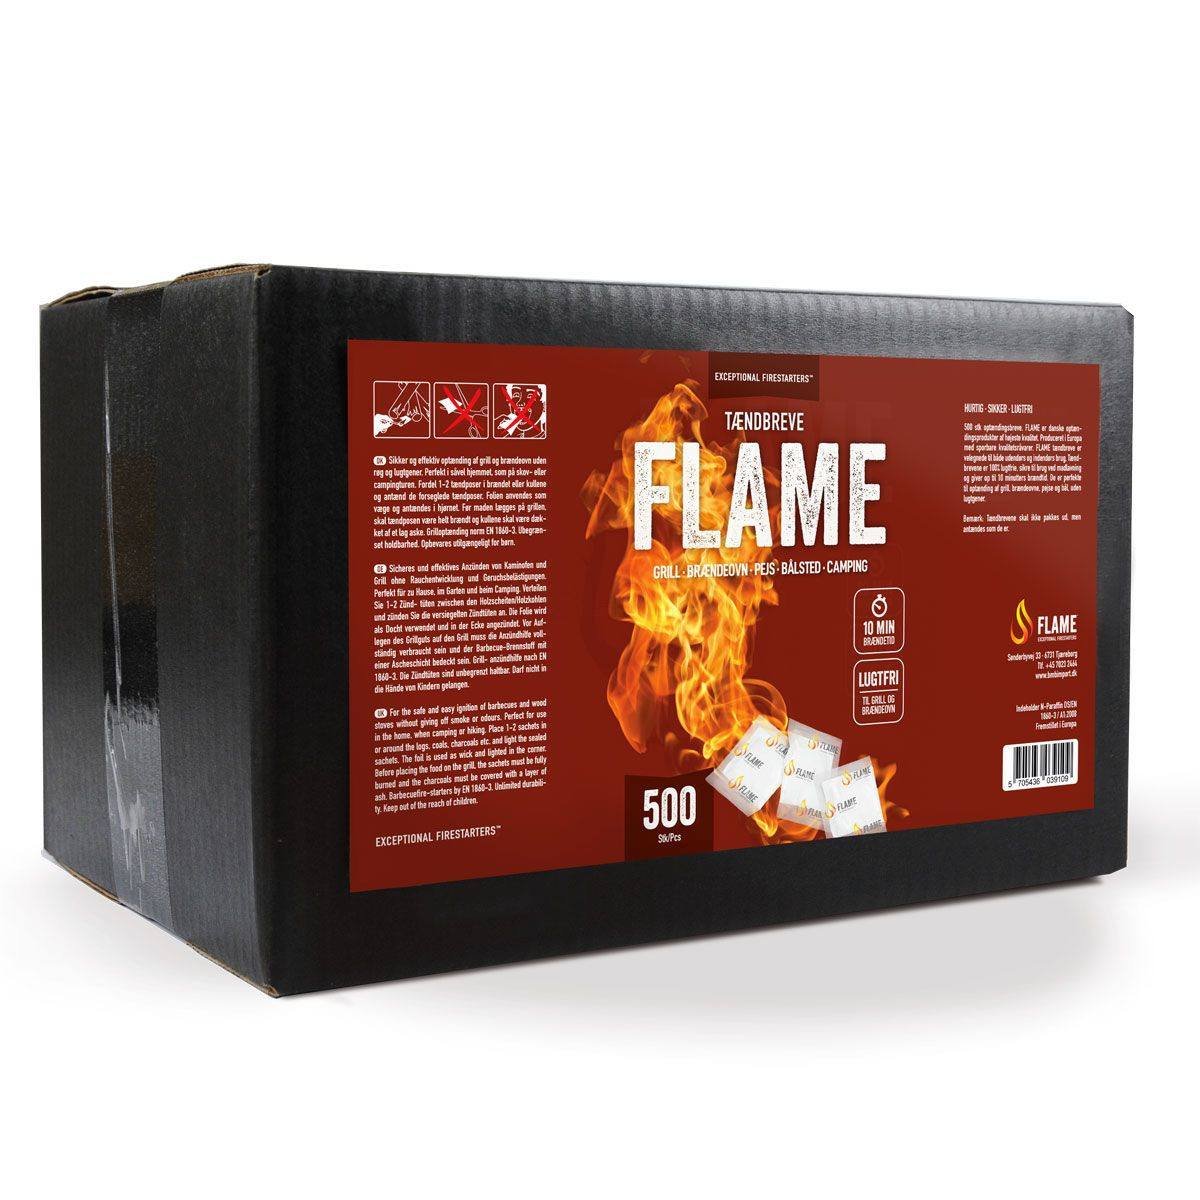 Flame tændbreve - 500 stk i papkasse